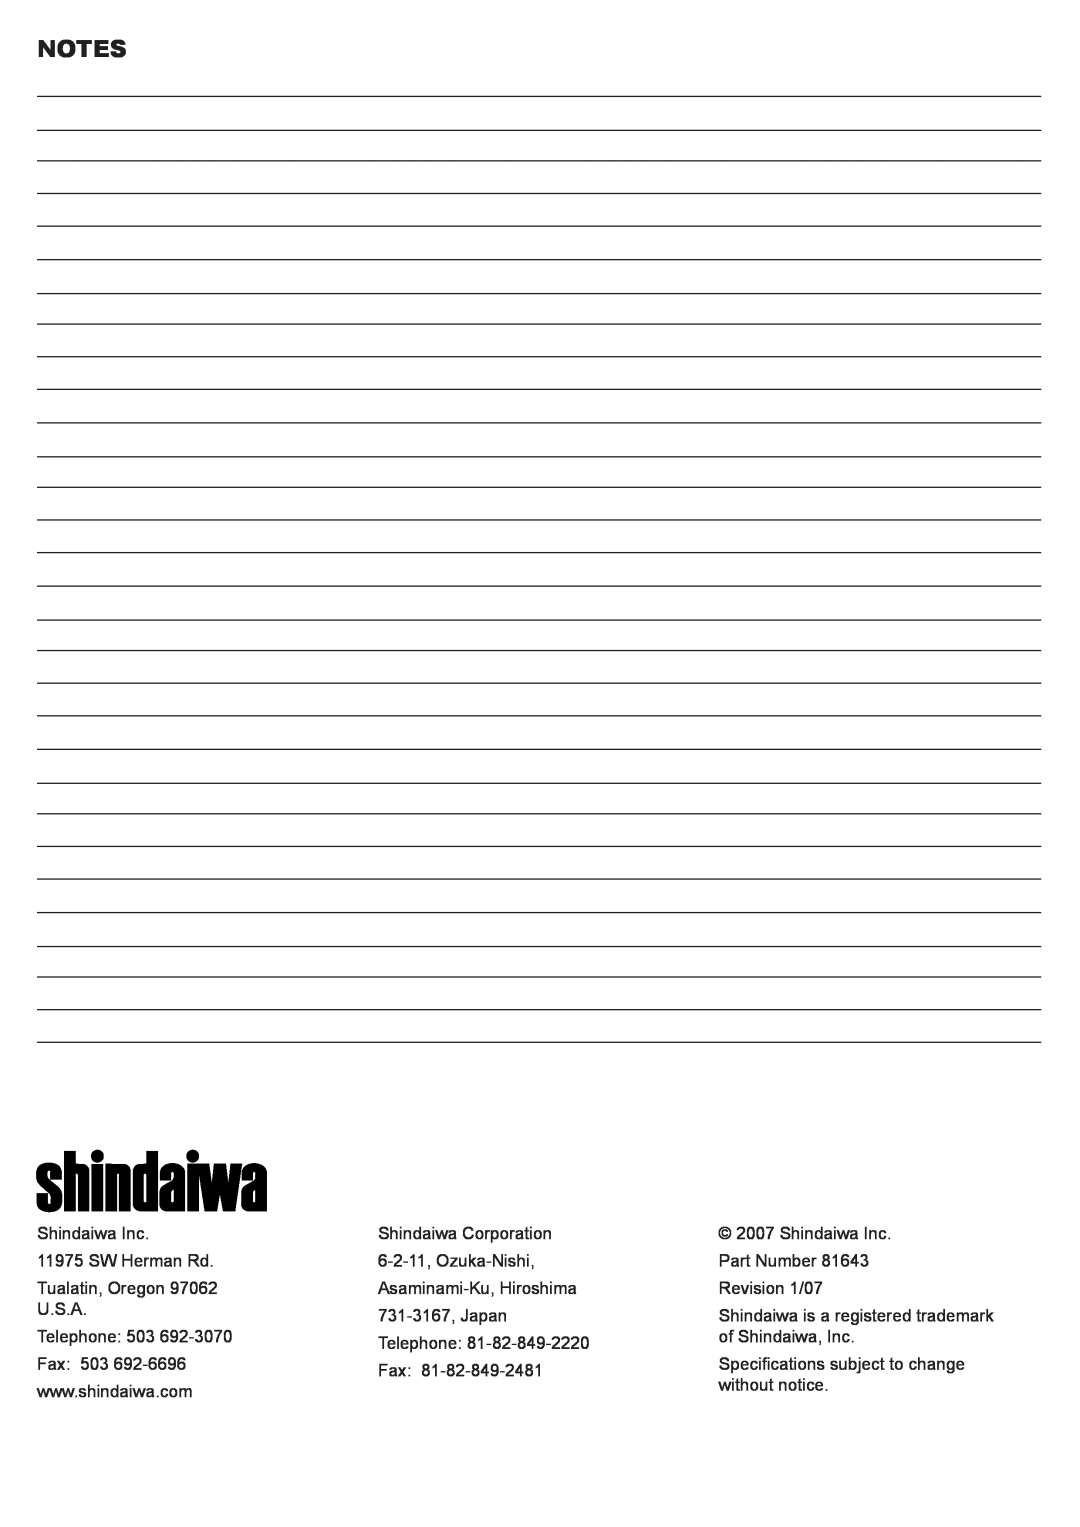 Shindaiwa T242X, 81643 manual Shindaiwa Inc 